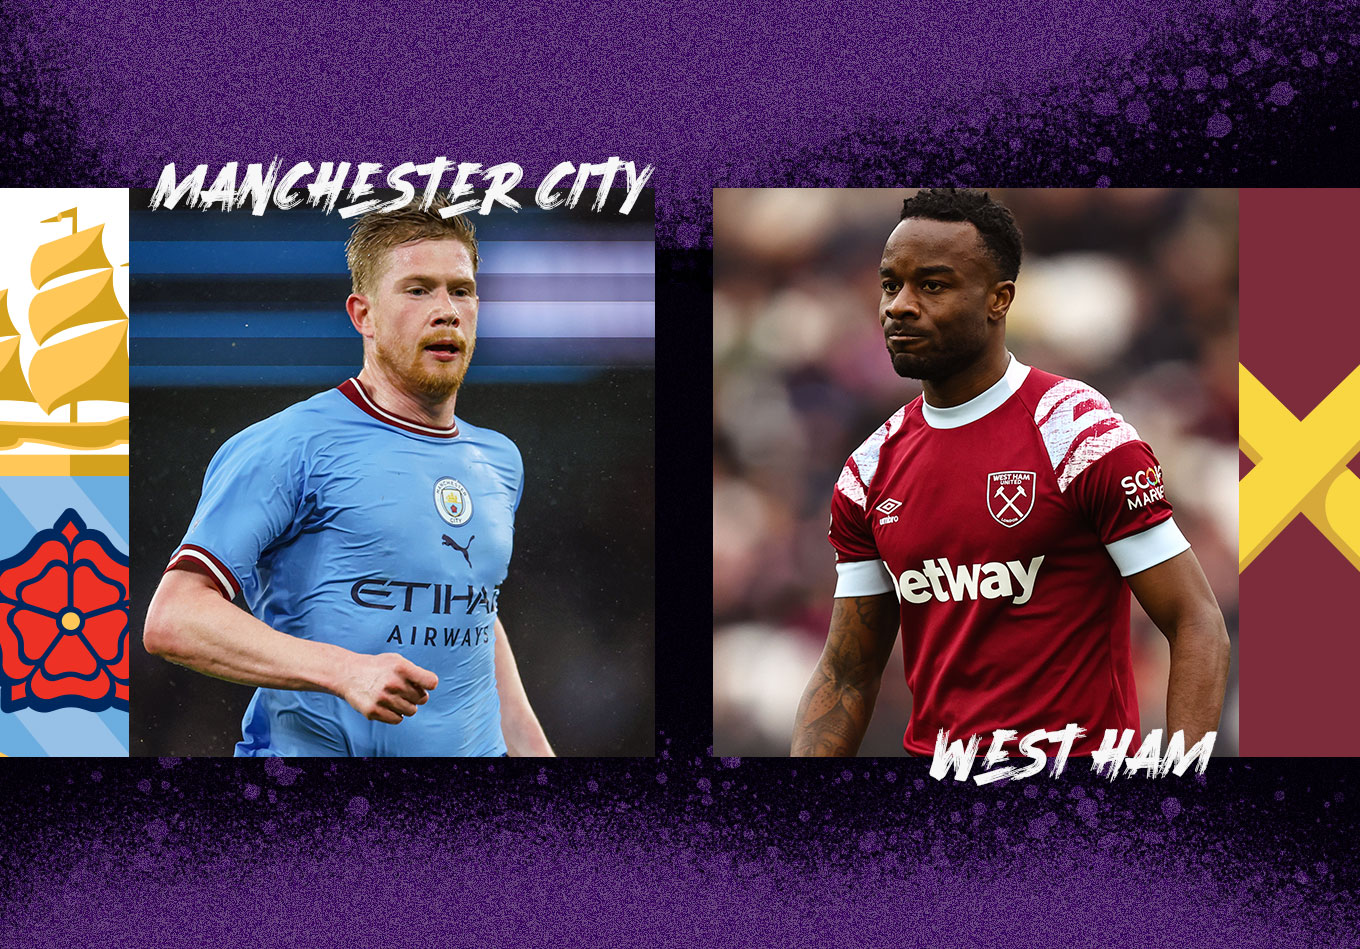 Man City vs West Ham: Prediction and Stats